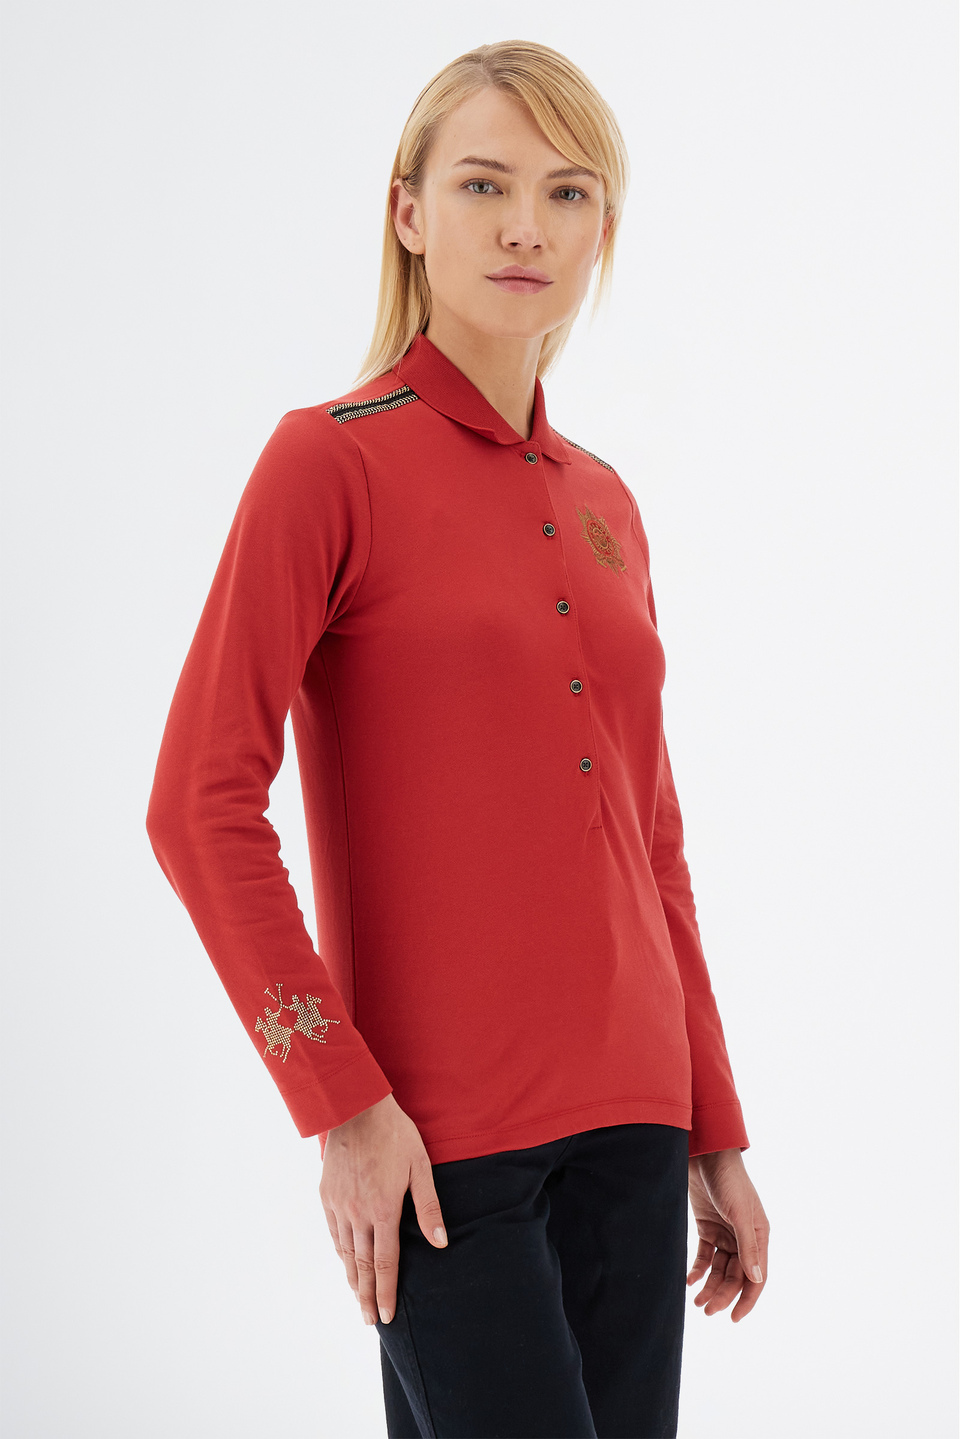 Women’s Polo Guards Long Sleeves Cotton Piqué Stretch | La Martina - Official Online Shop